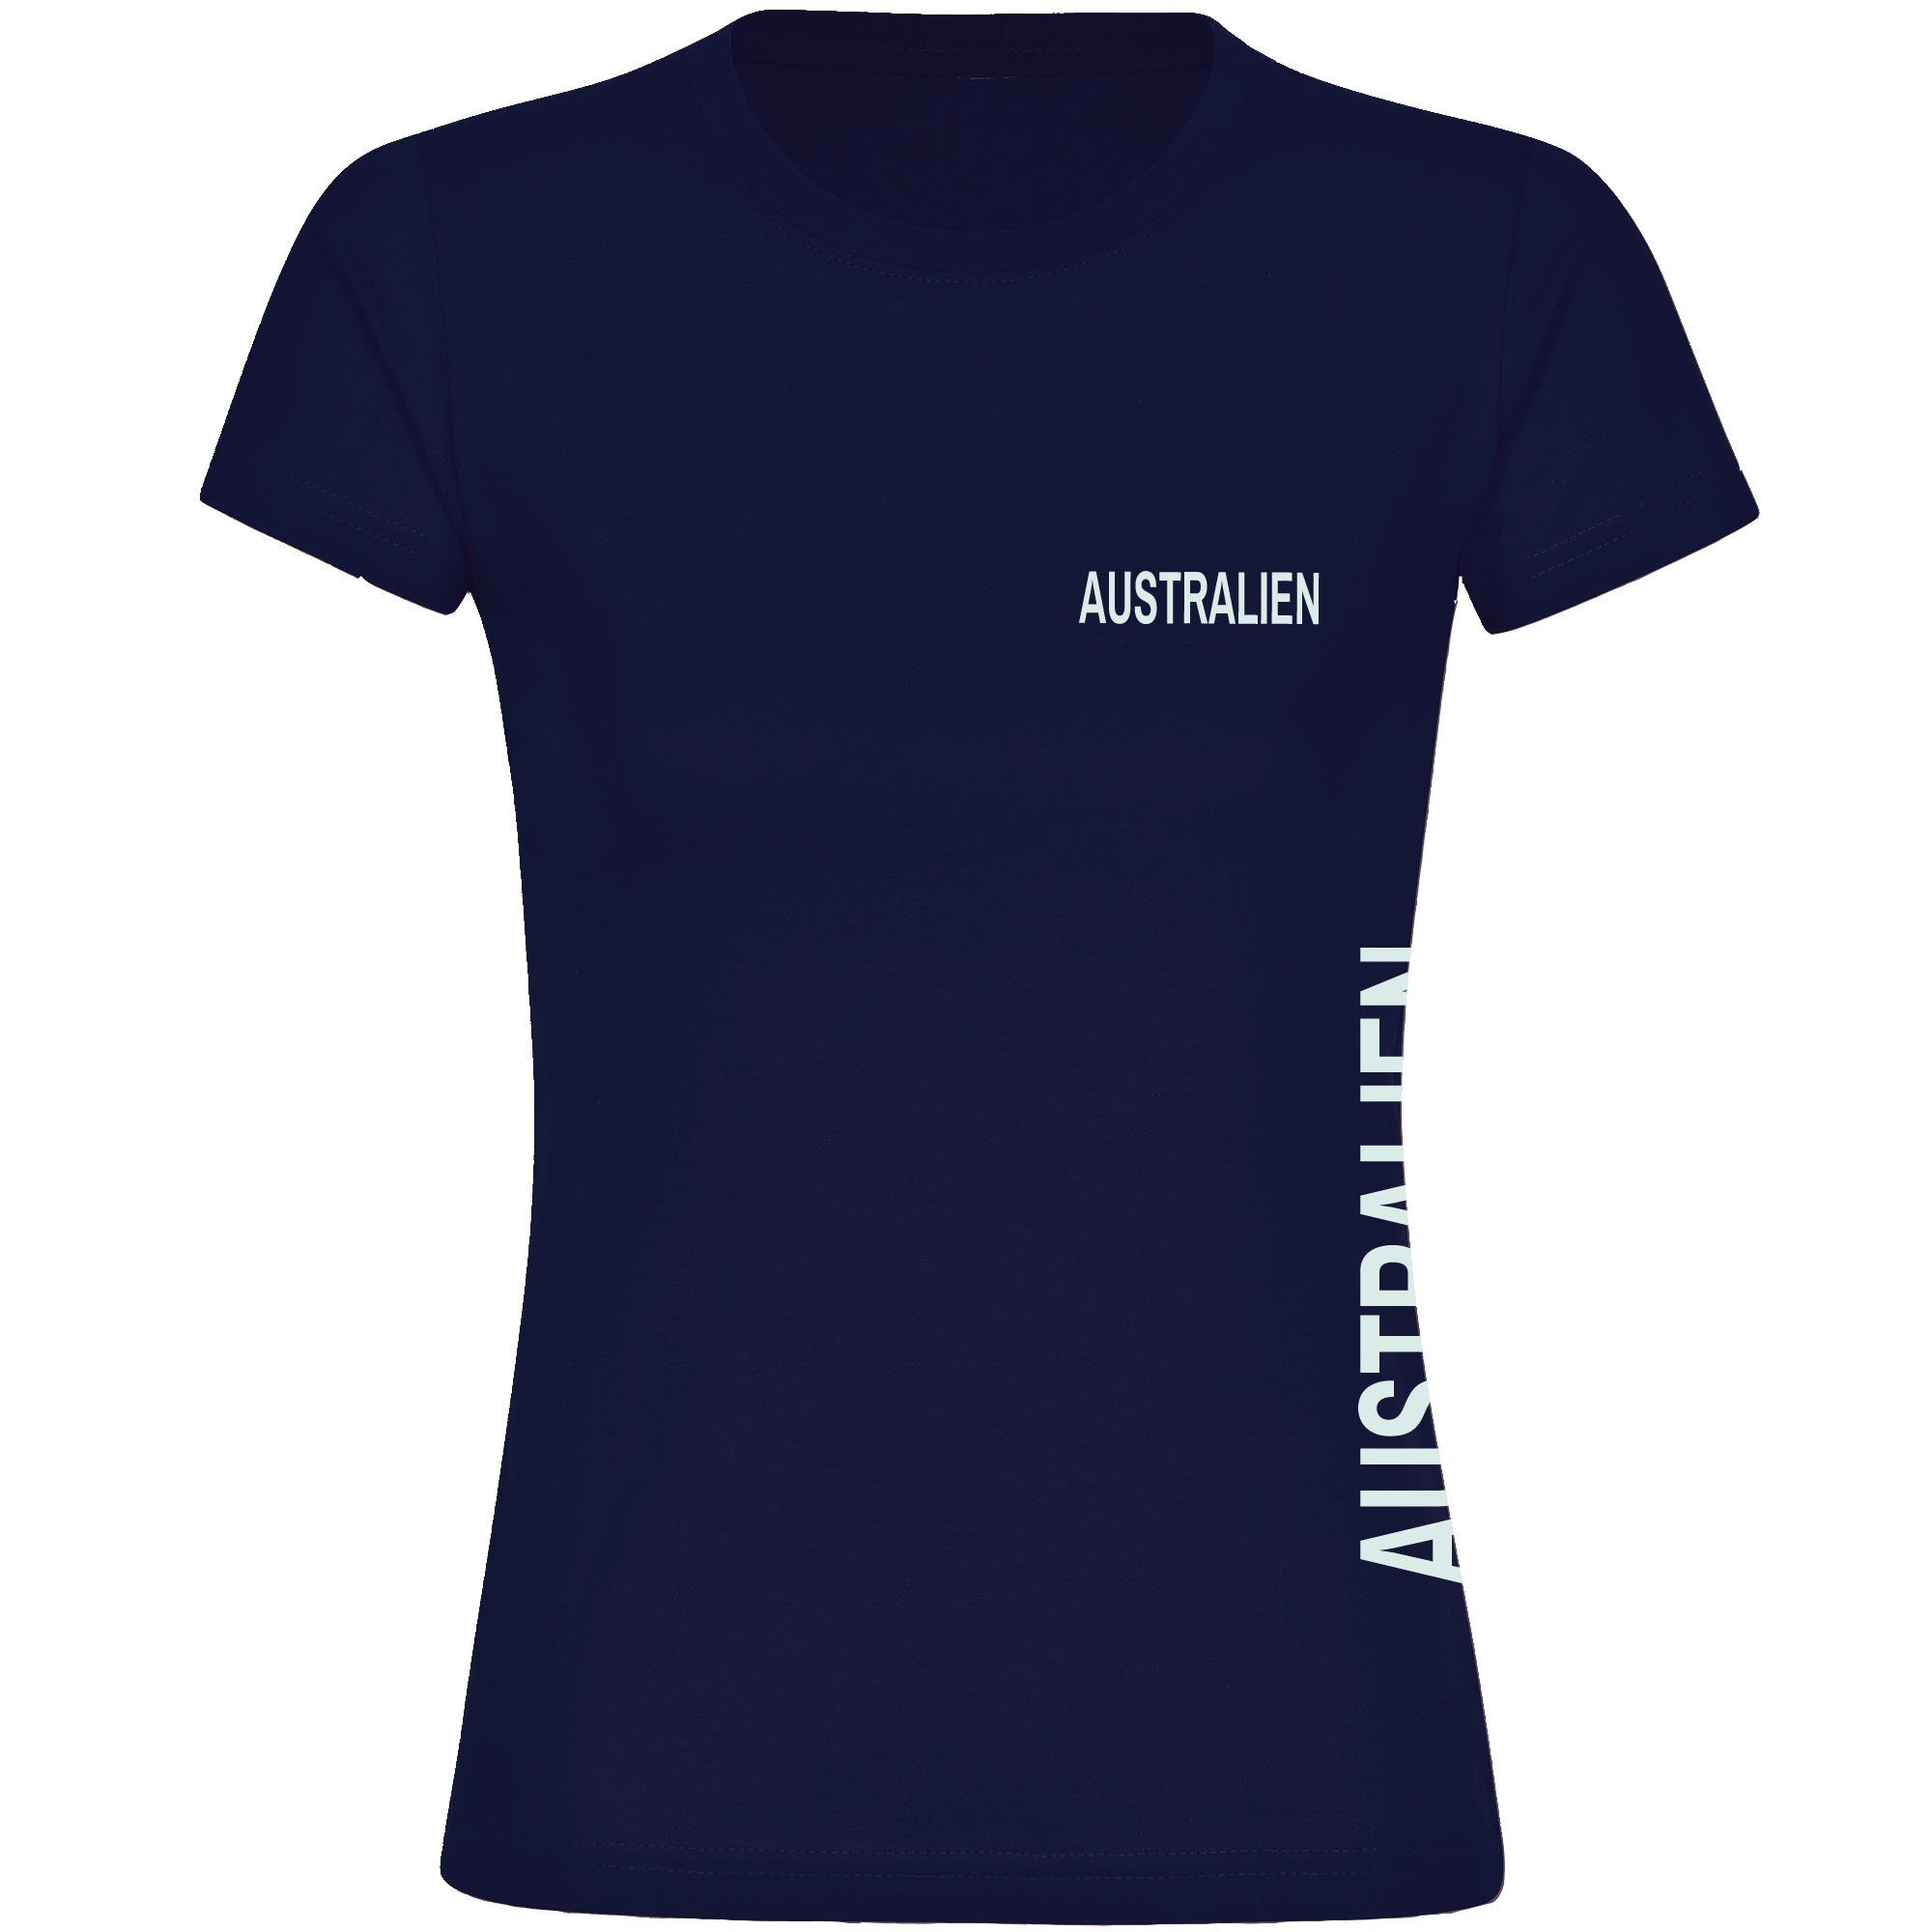 multifanshop T-Shirt Damen Australien - Brust & Seite - Frauen